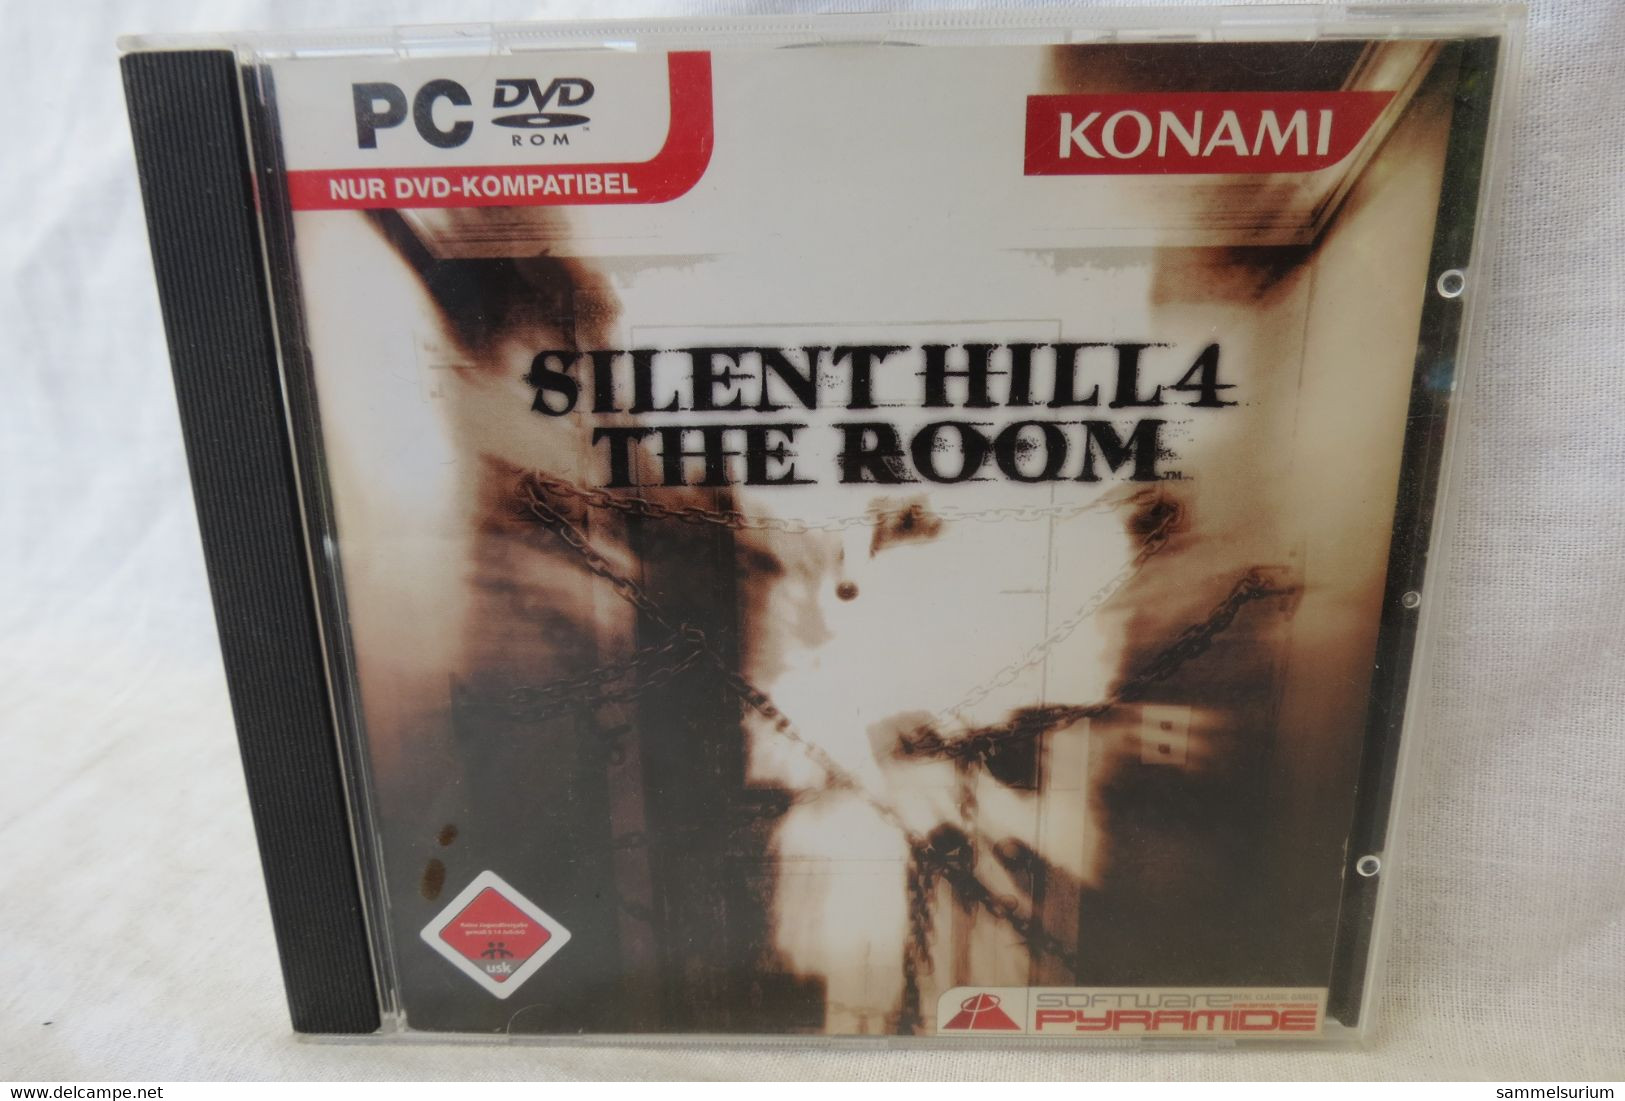 PC Spiel DVD "Silent Hill 4 The Room" - Musik-DVD's